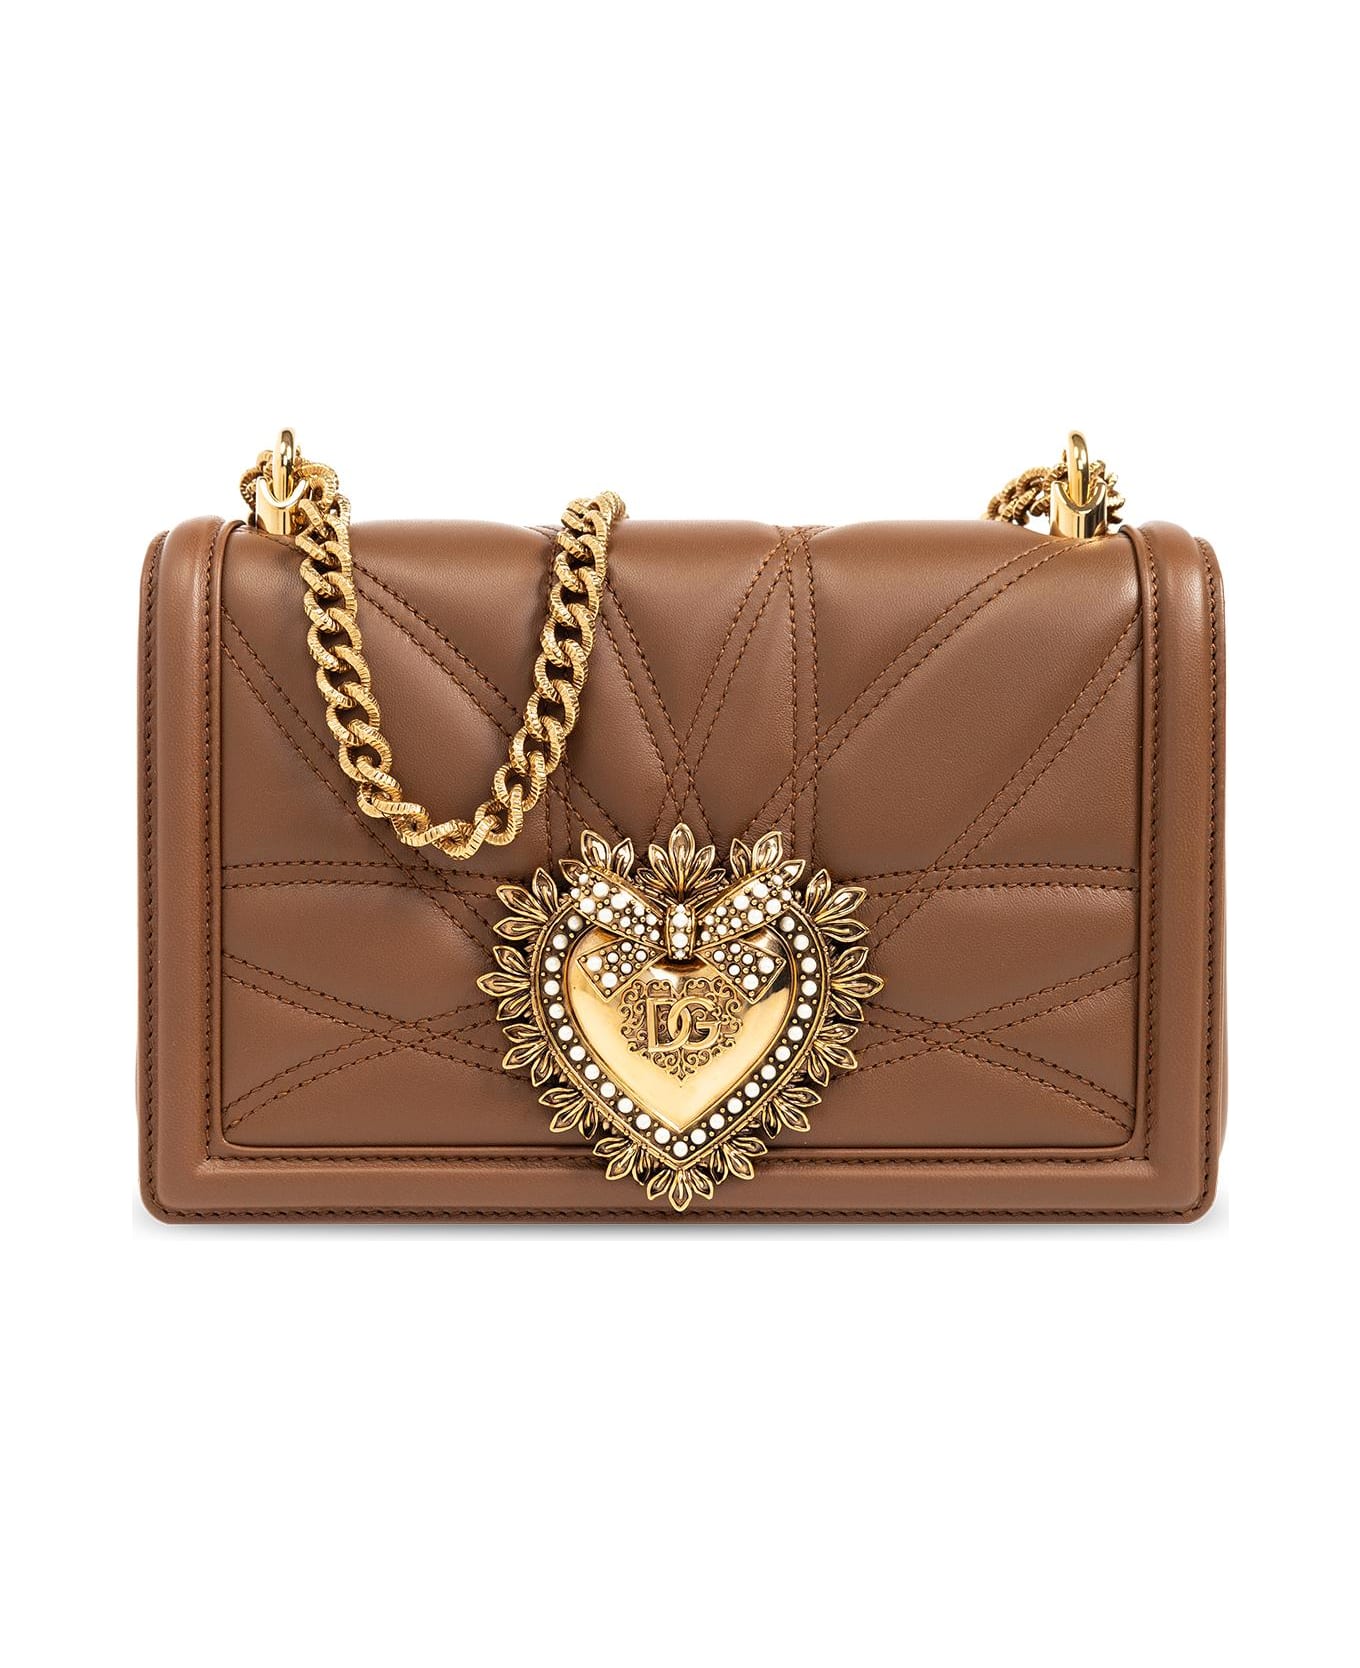 Dolce & Gabbana Shoulder Bag With Logo - Cammello